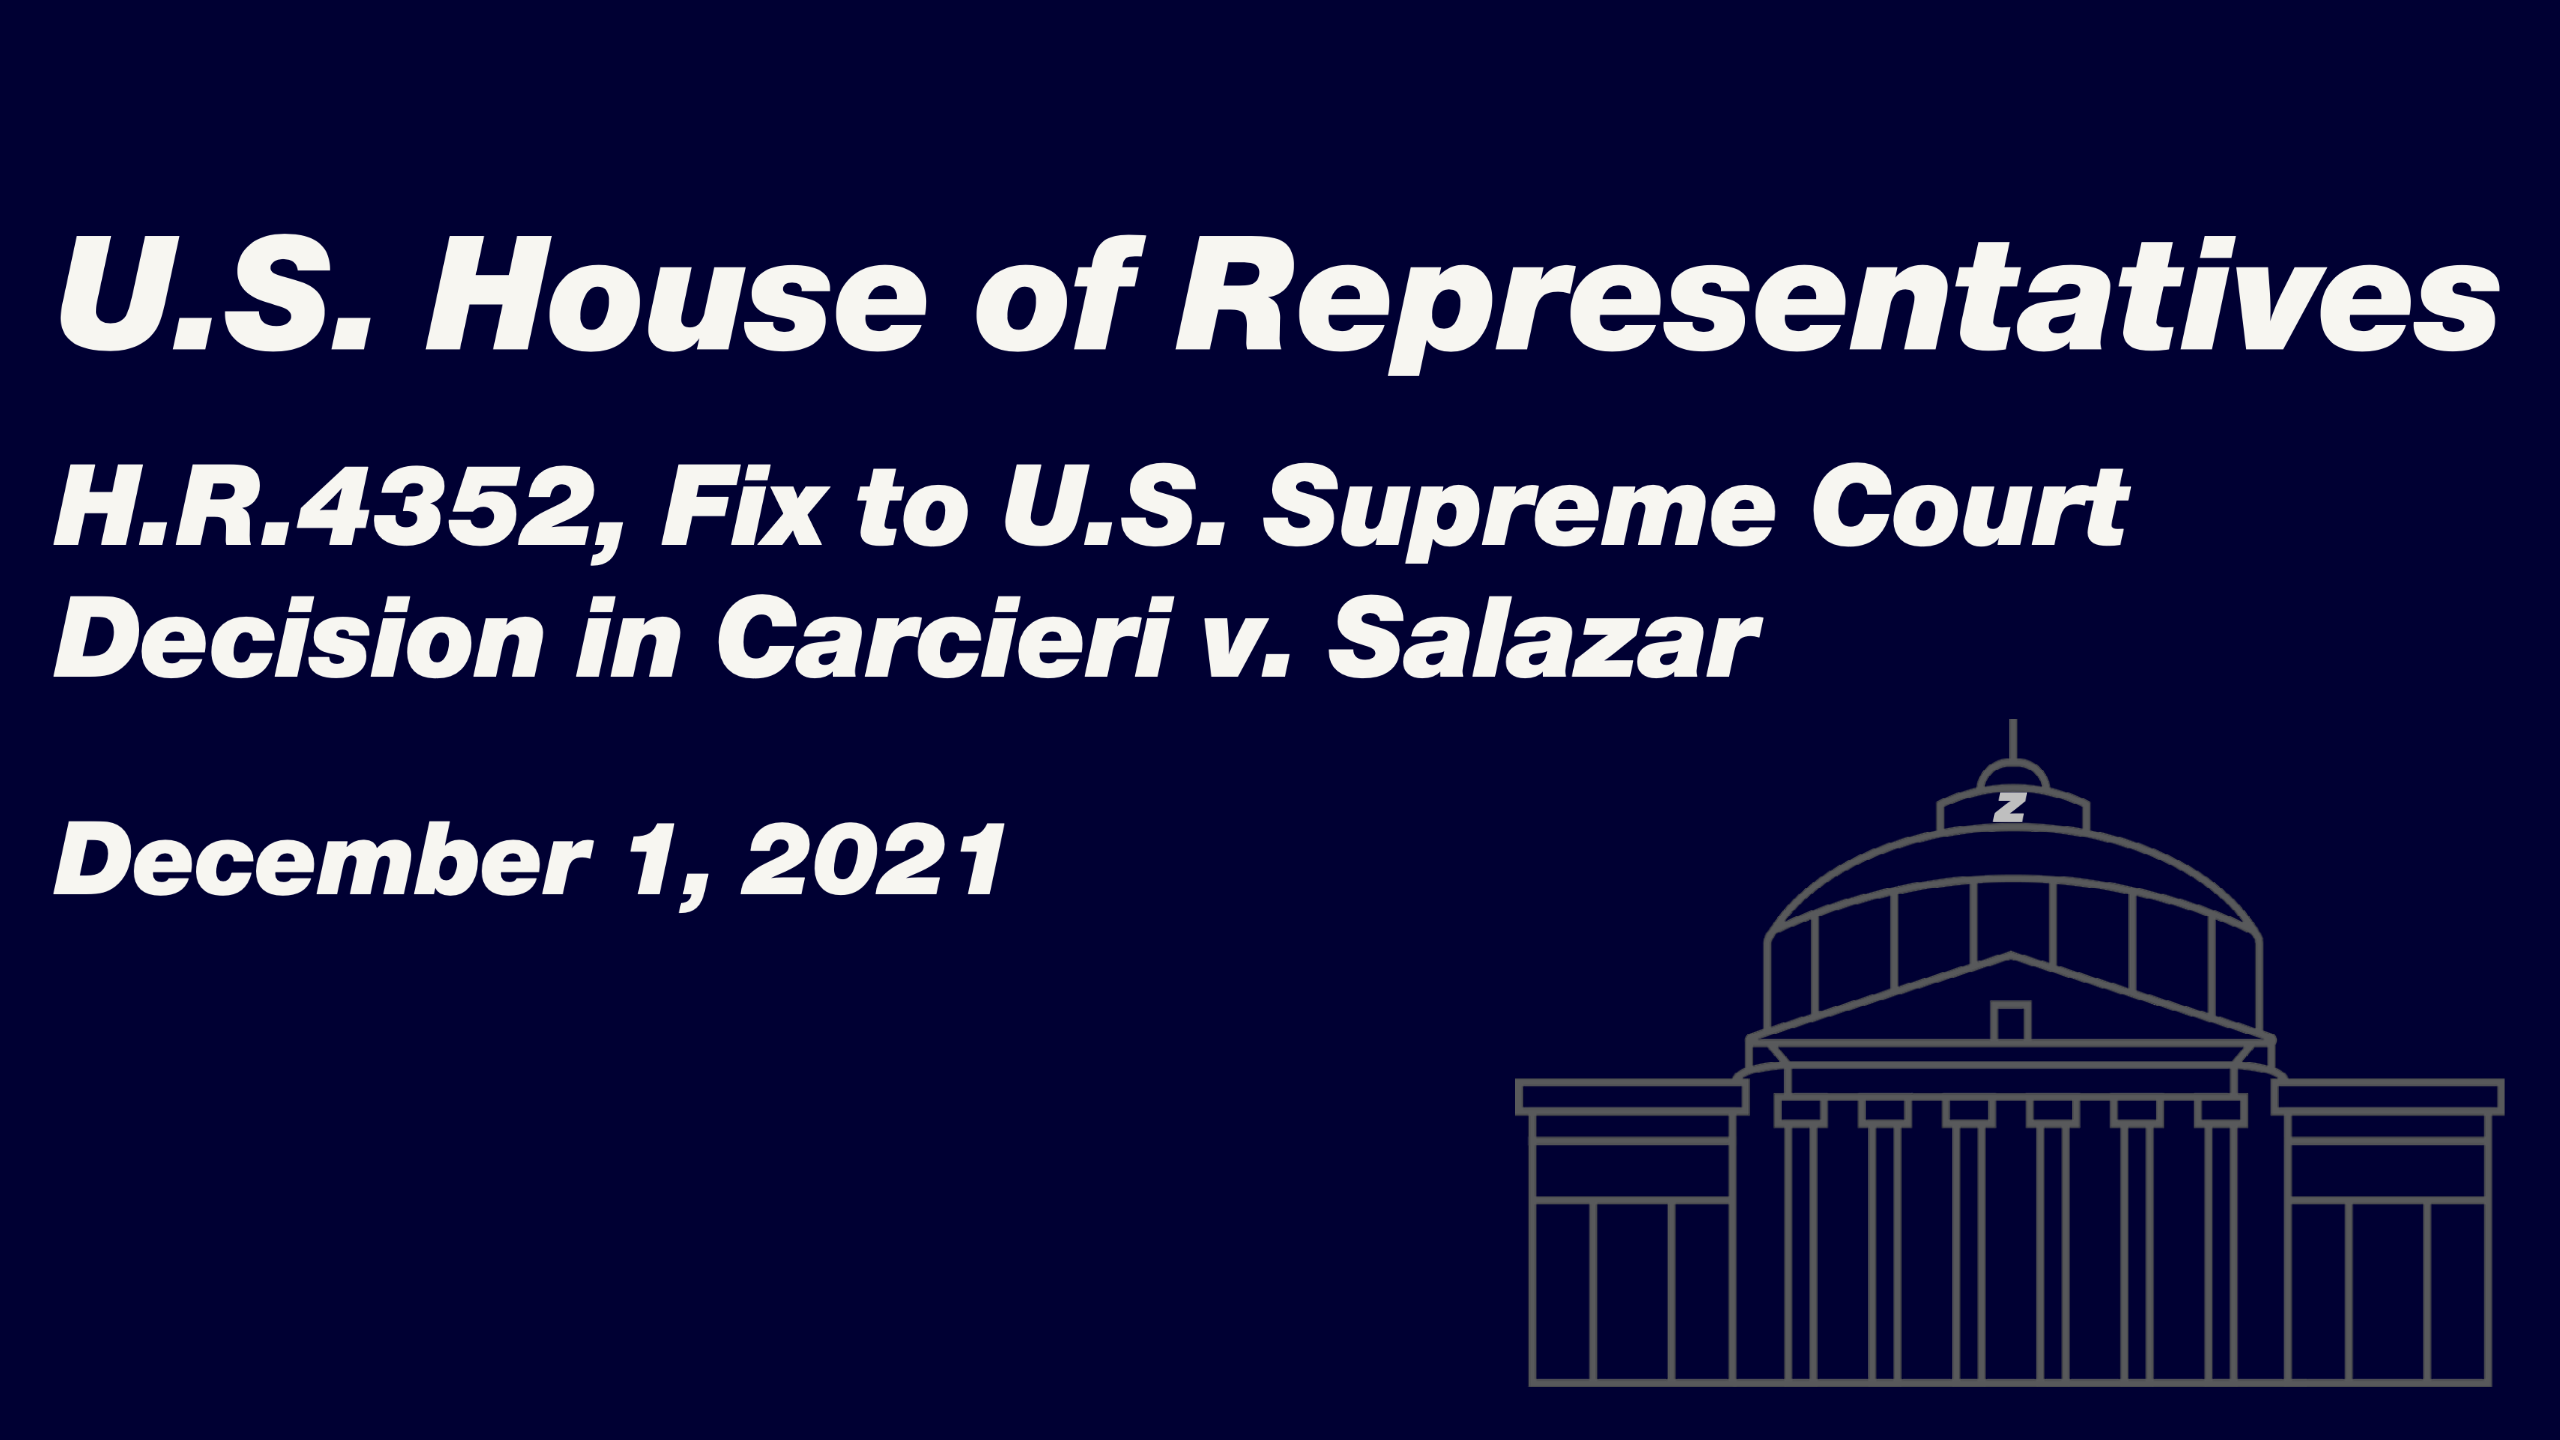 H.R.4352 - Legislative Fix to U.S. Supreme Court Decision in Carcieri v. Salazar